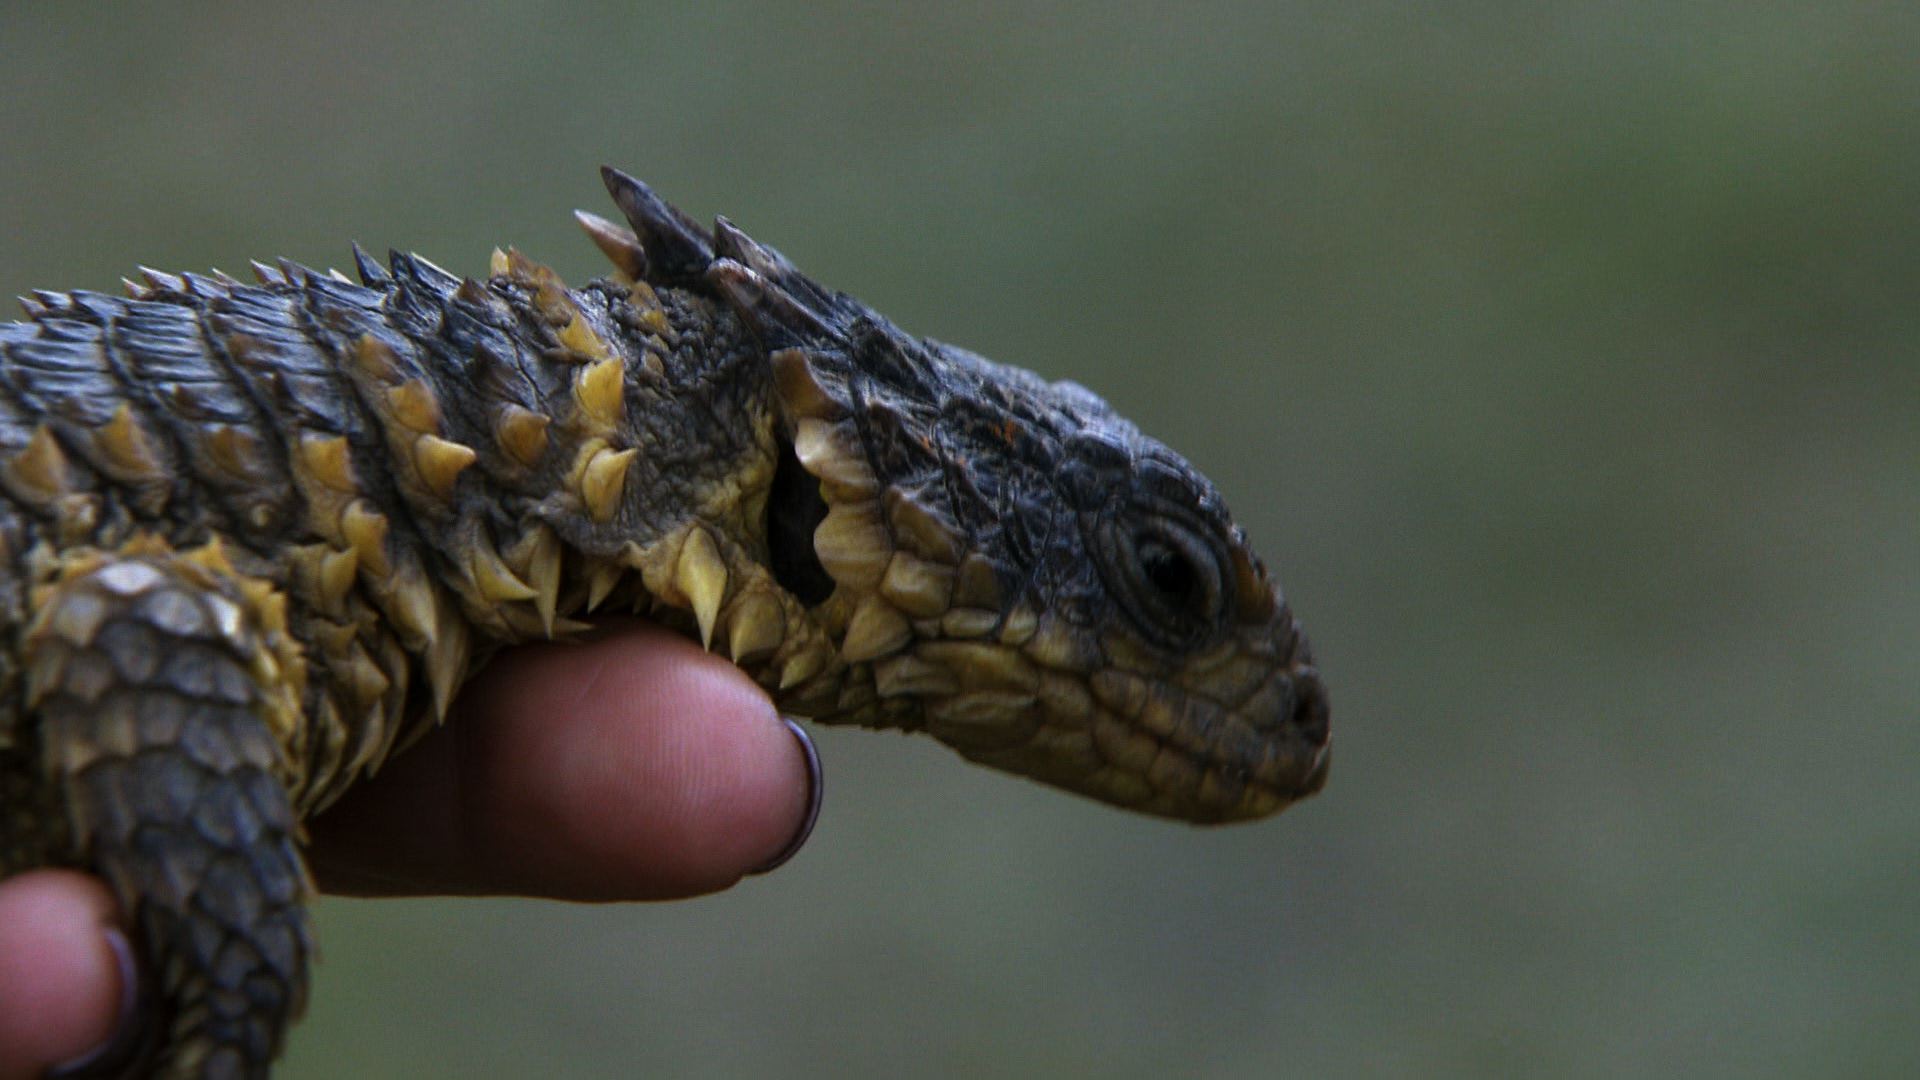 Sungazer Lizard - National Geographic Channel